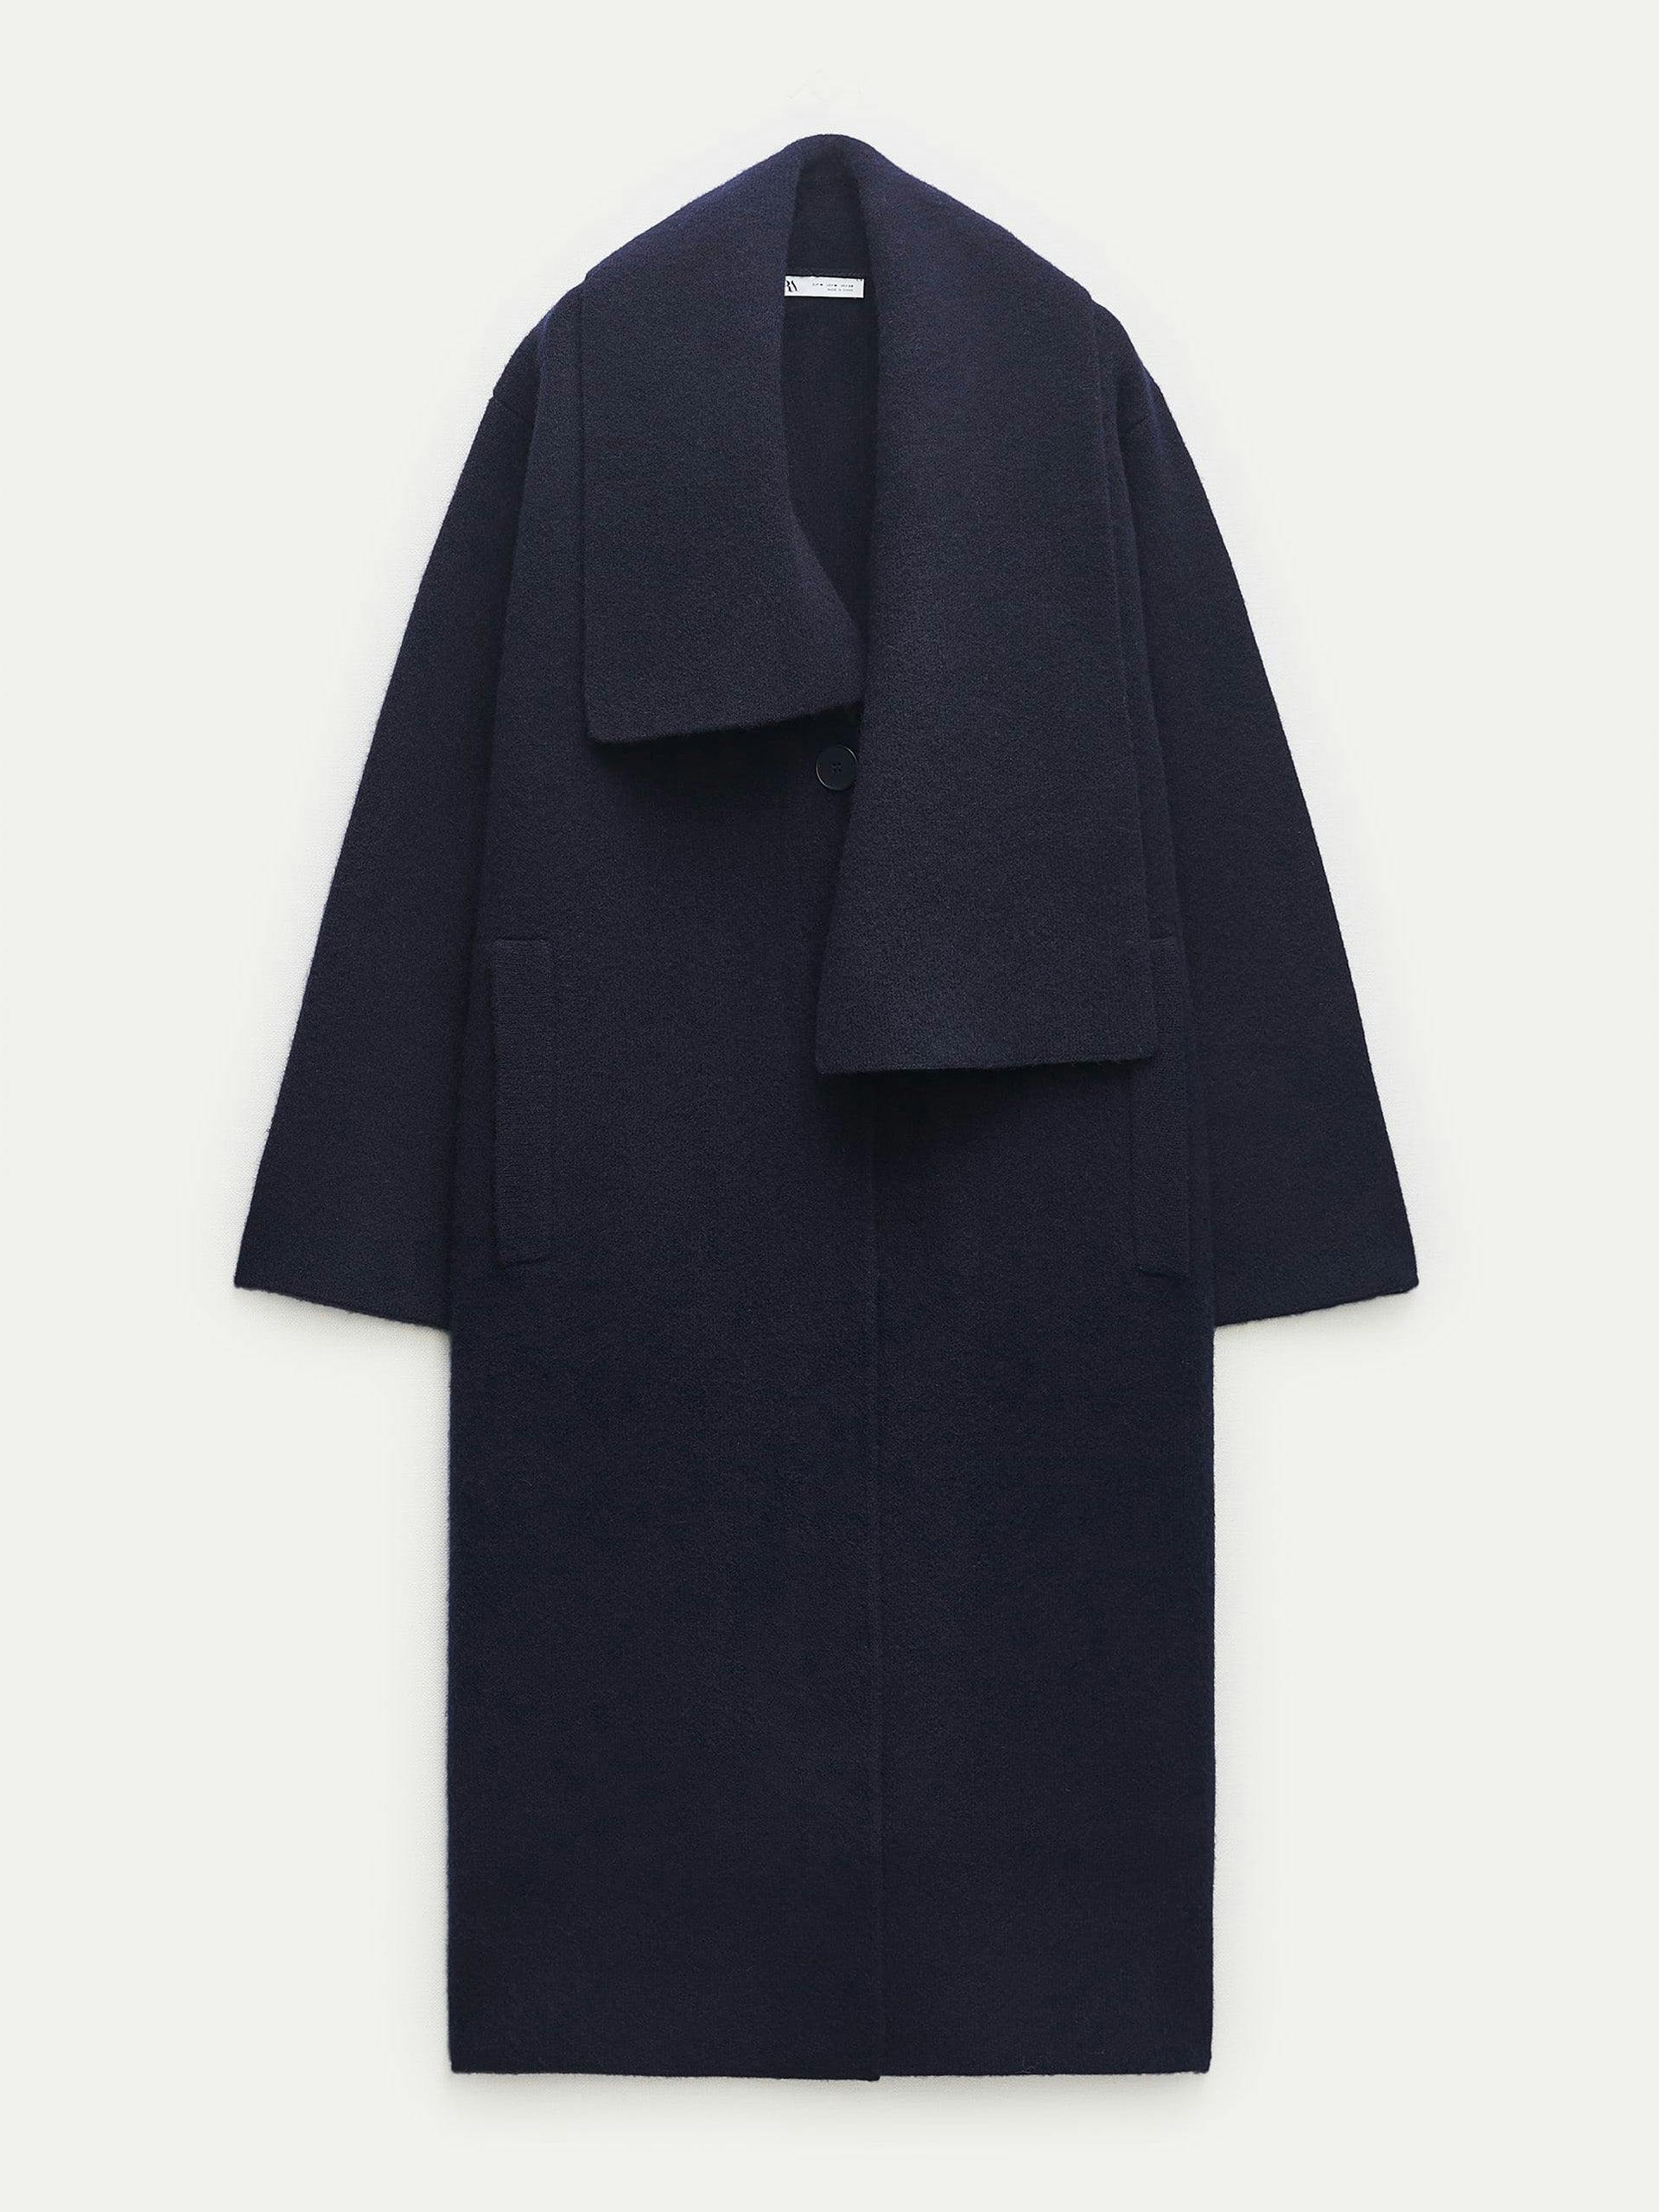 Wool coat with asymmetric lapel collar